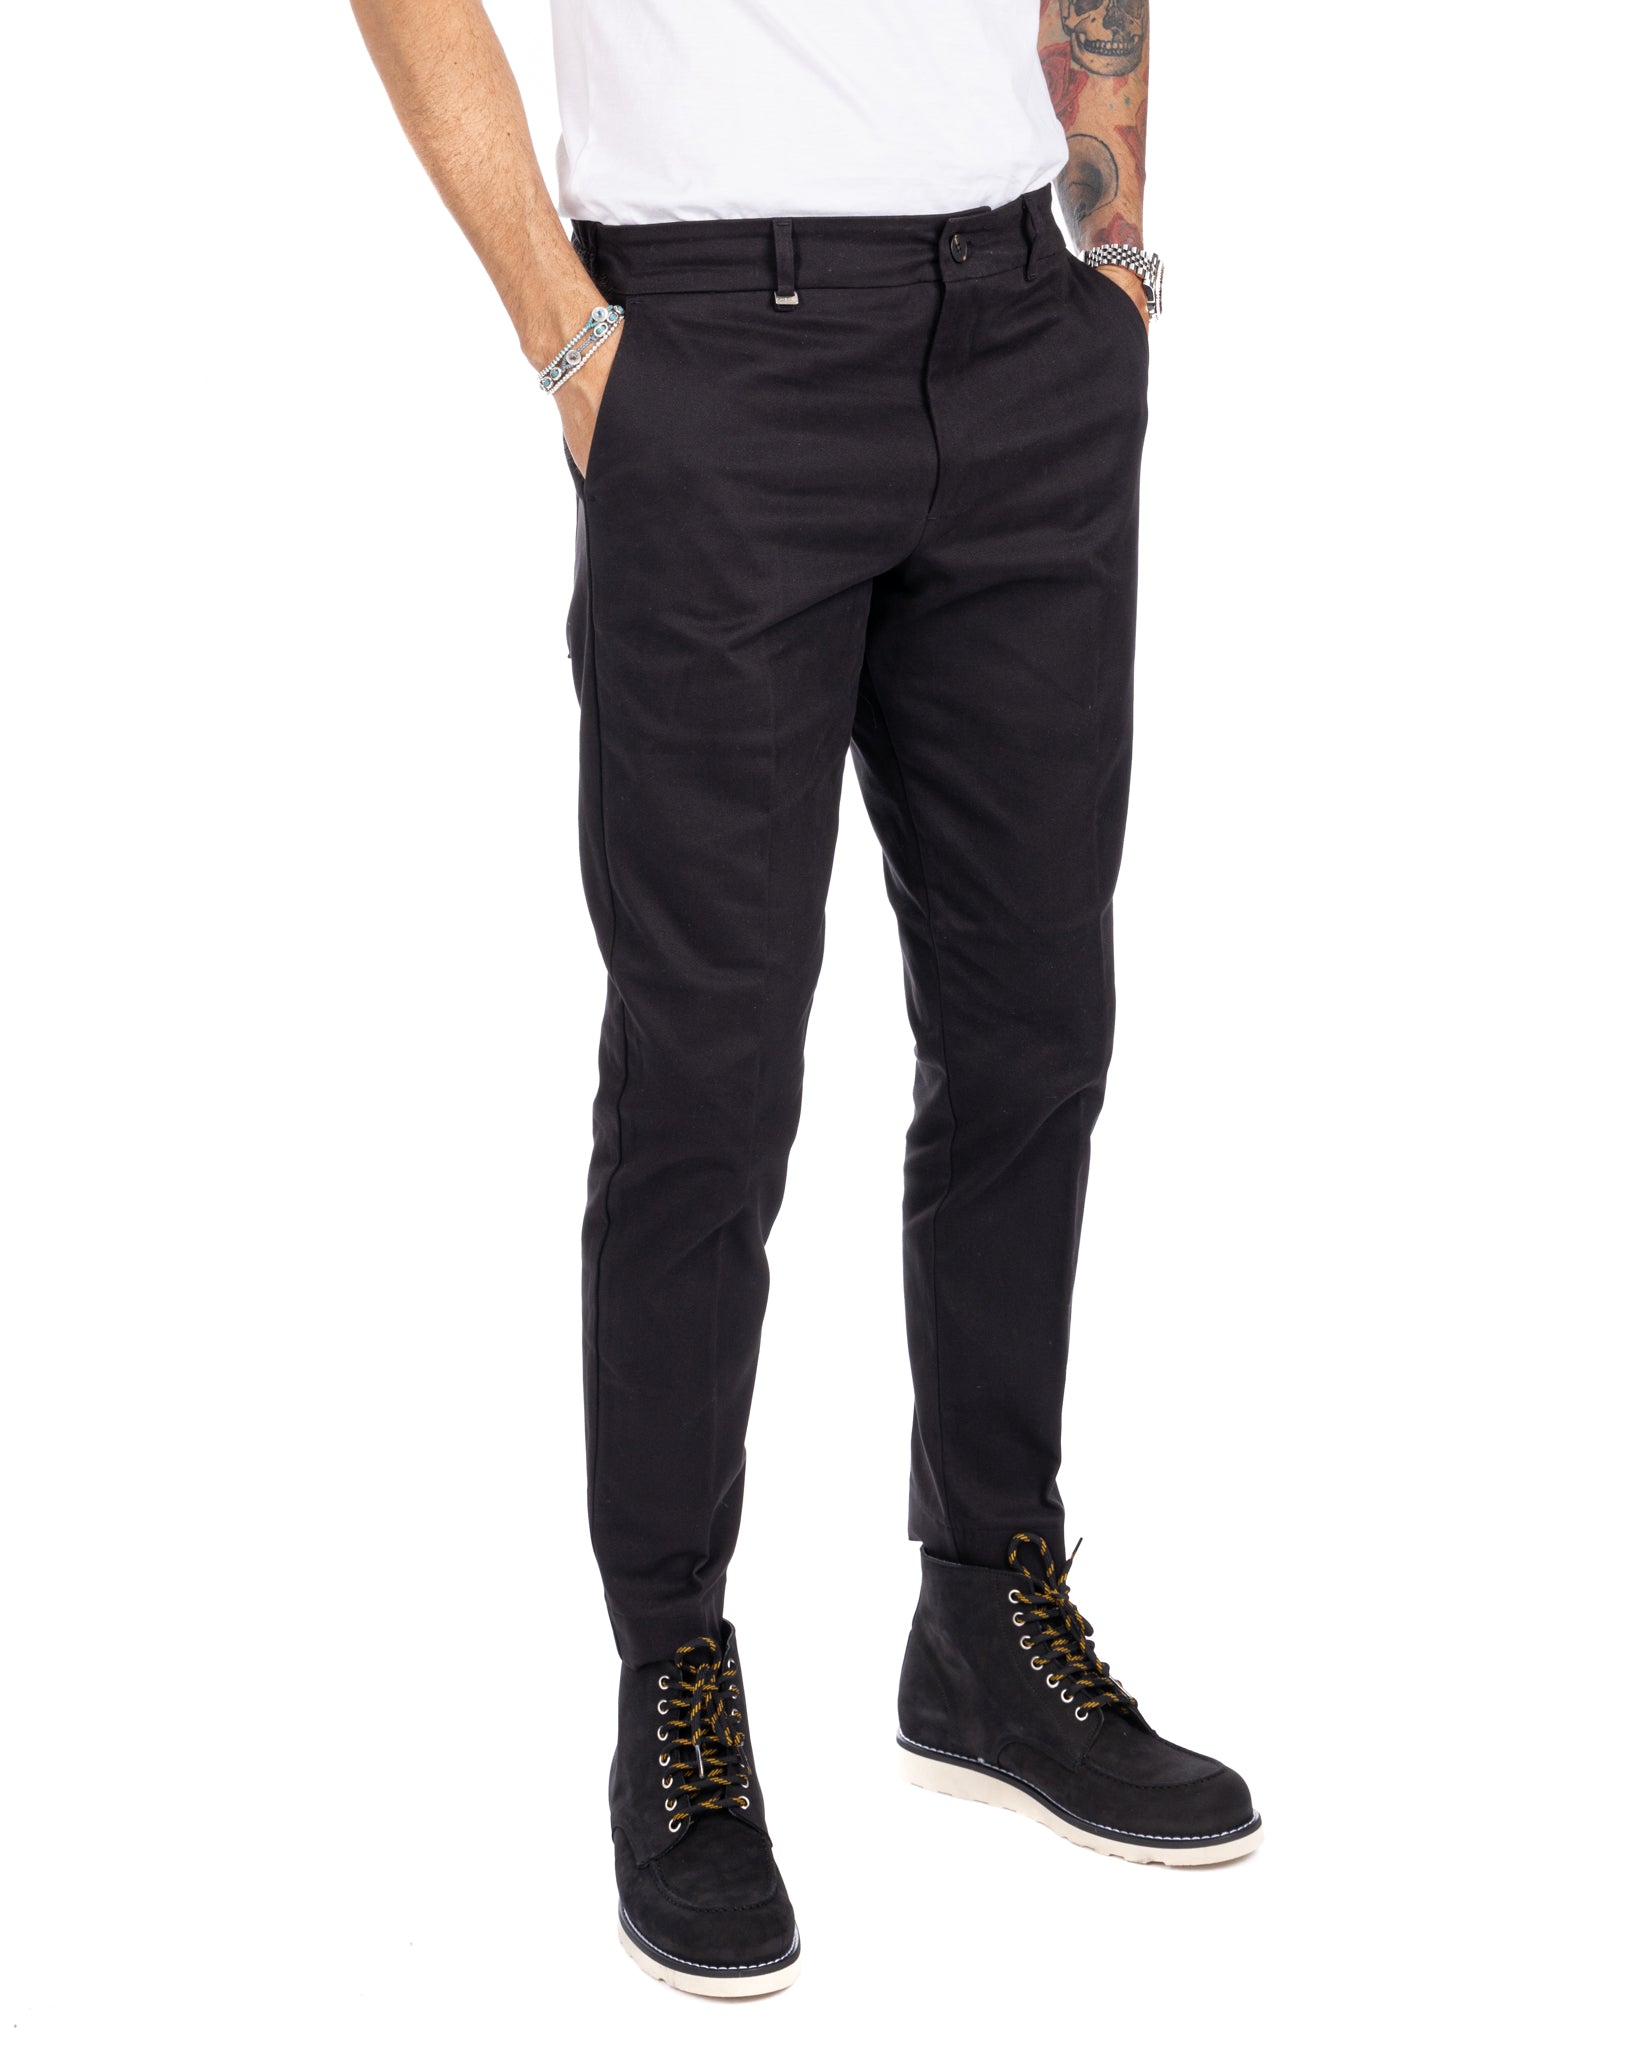 Elder - black cotton capri trousers